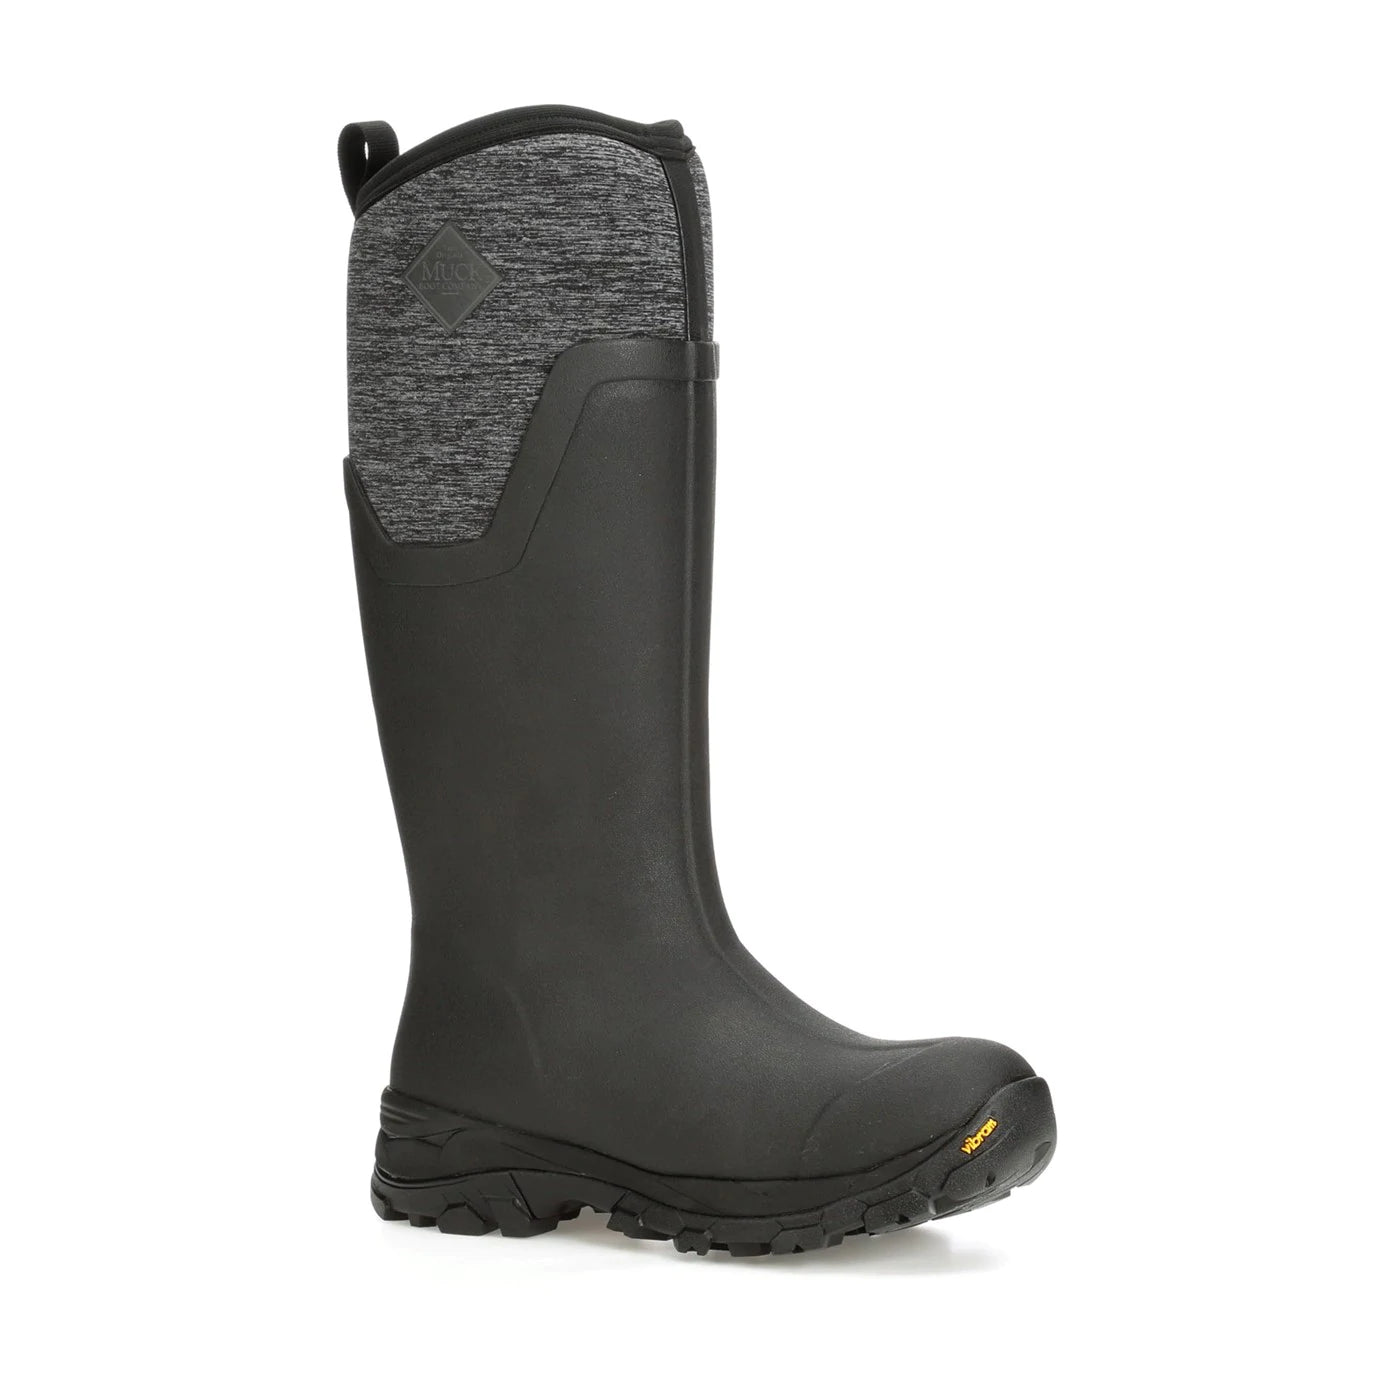 Muck Boots 黃金大底 AG 全地形高筒雨靴 [ 冬季、羊毛內裡 ] 女